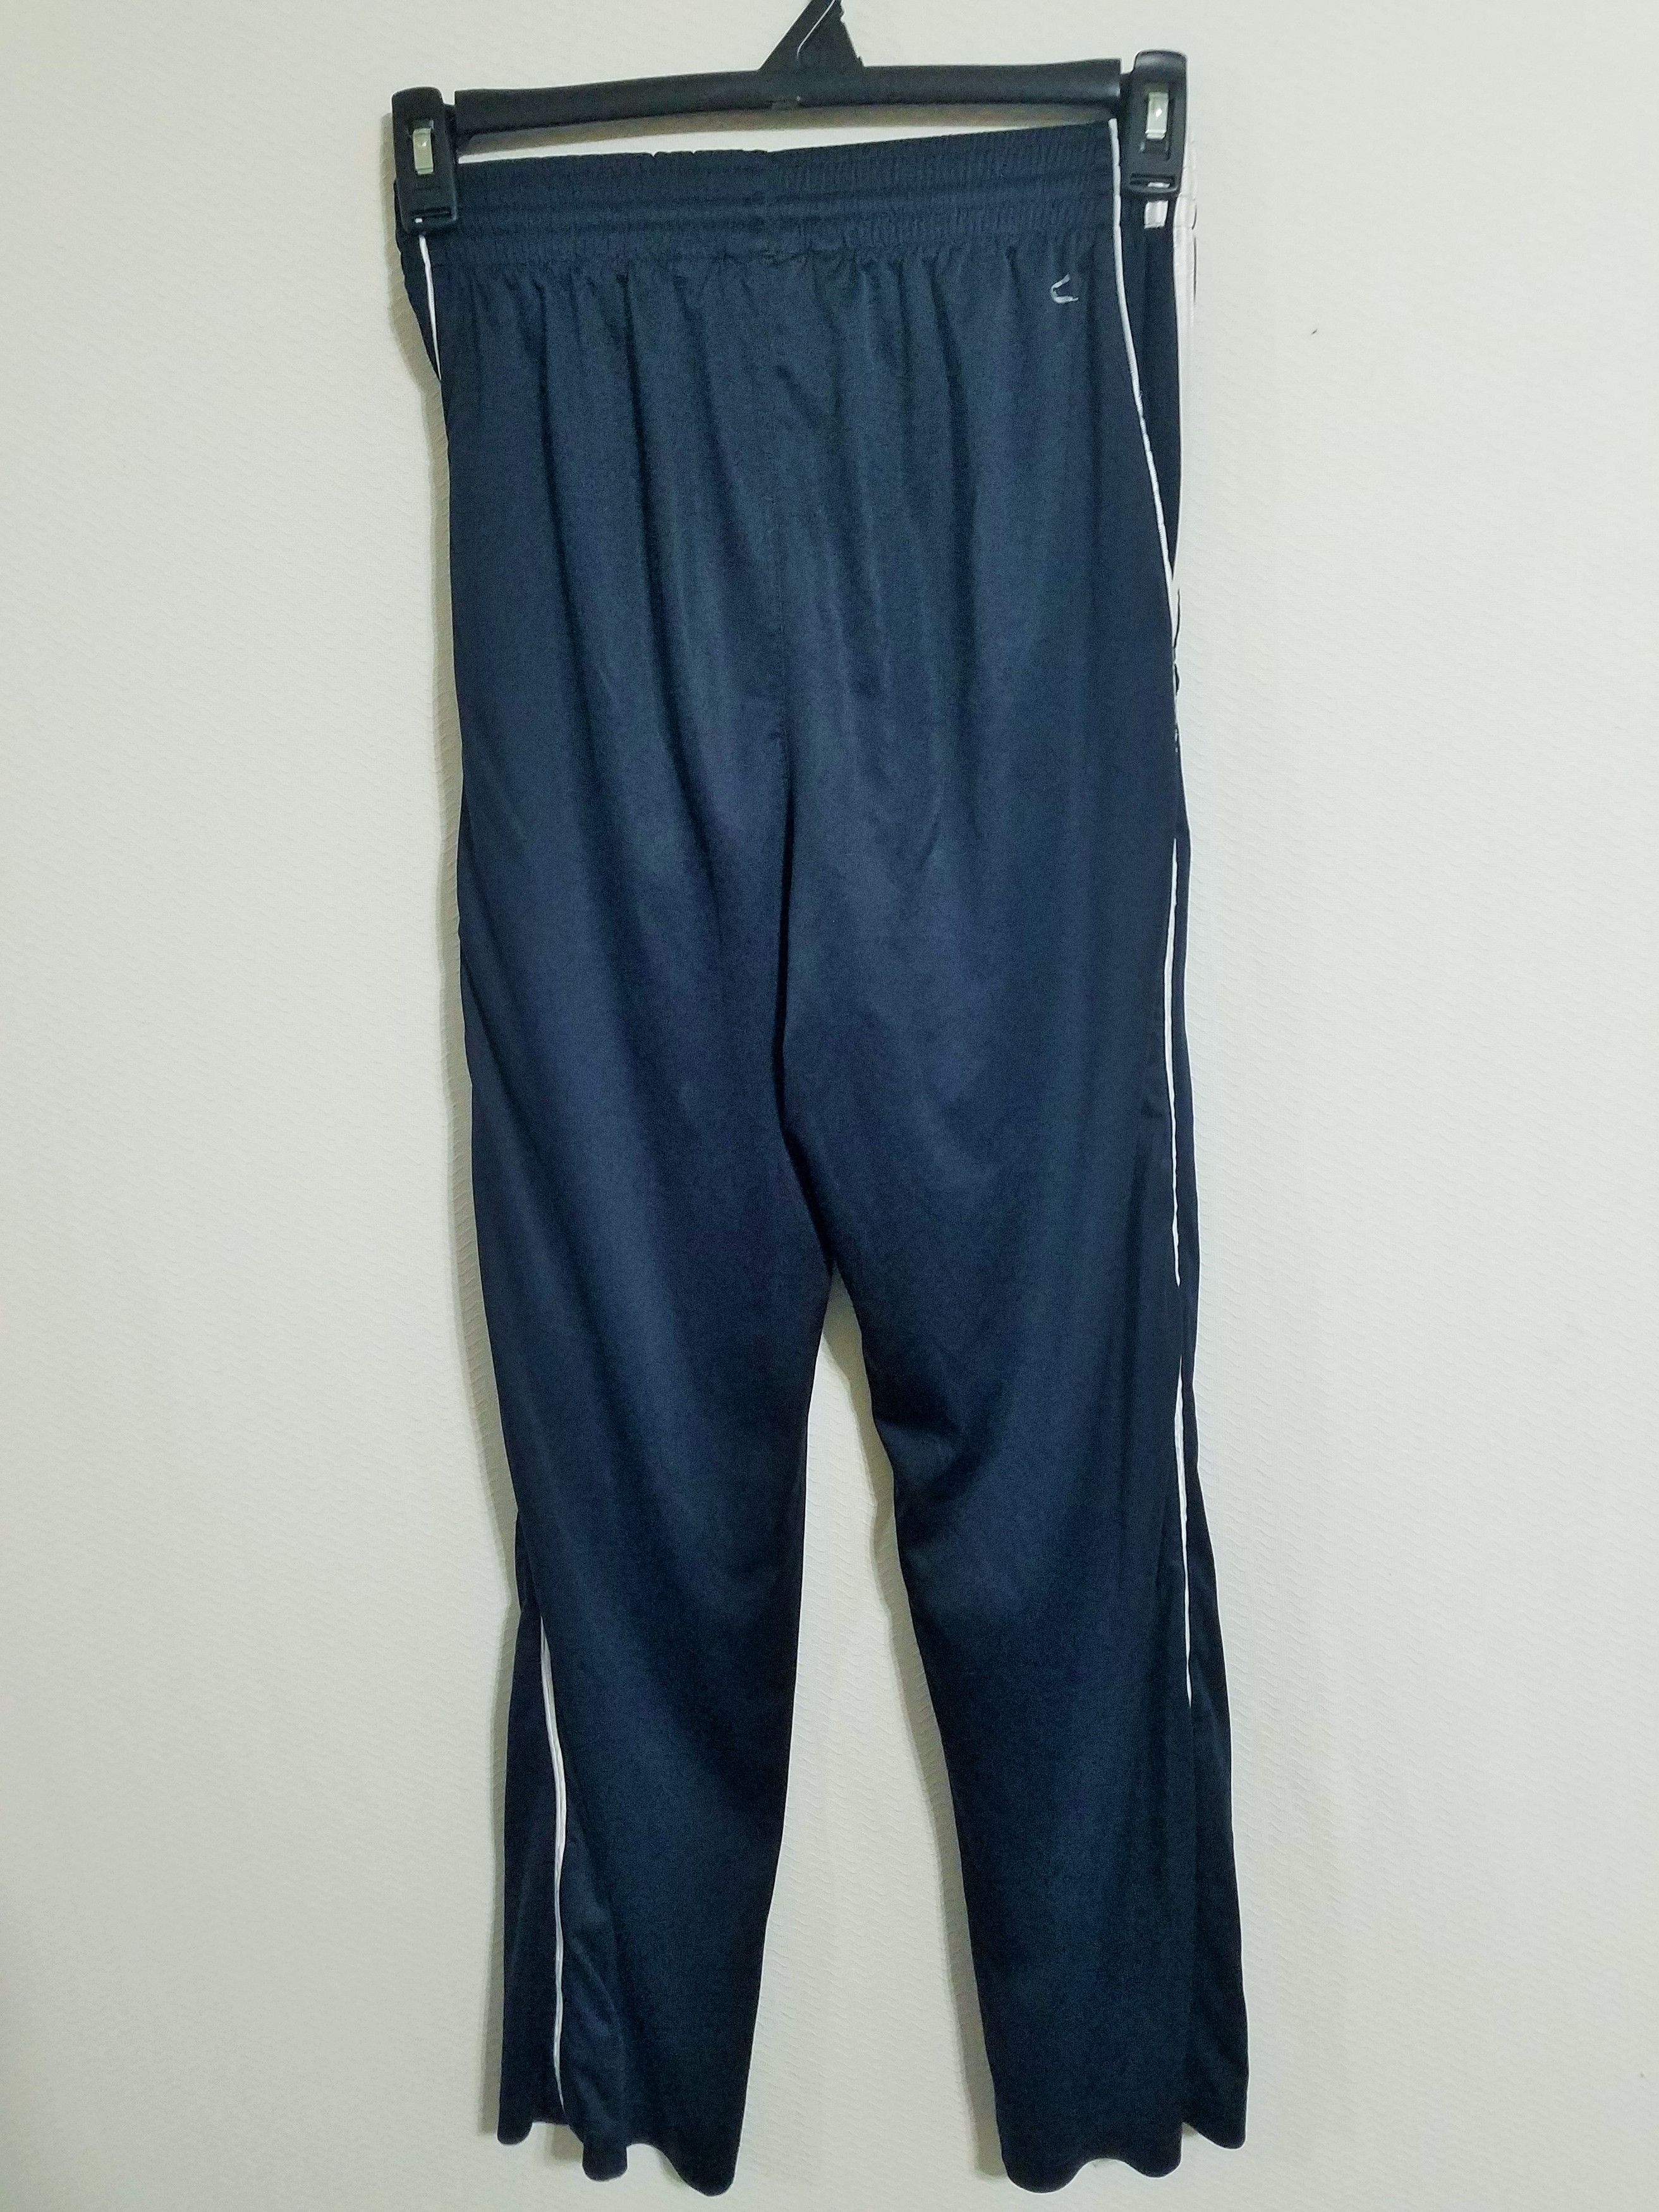 Adidas Adidas Men's Small Navy Blue Athletic Pants Joggers Track Size US 30 / EU 46 - 3 Thumbnail